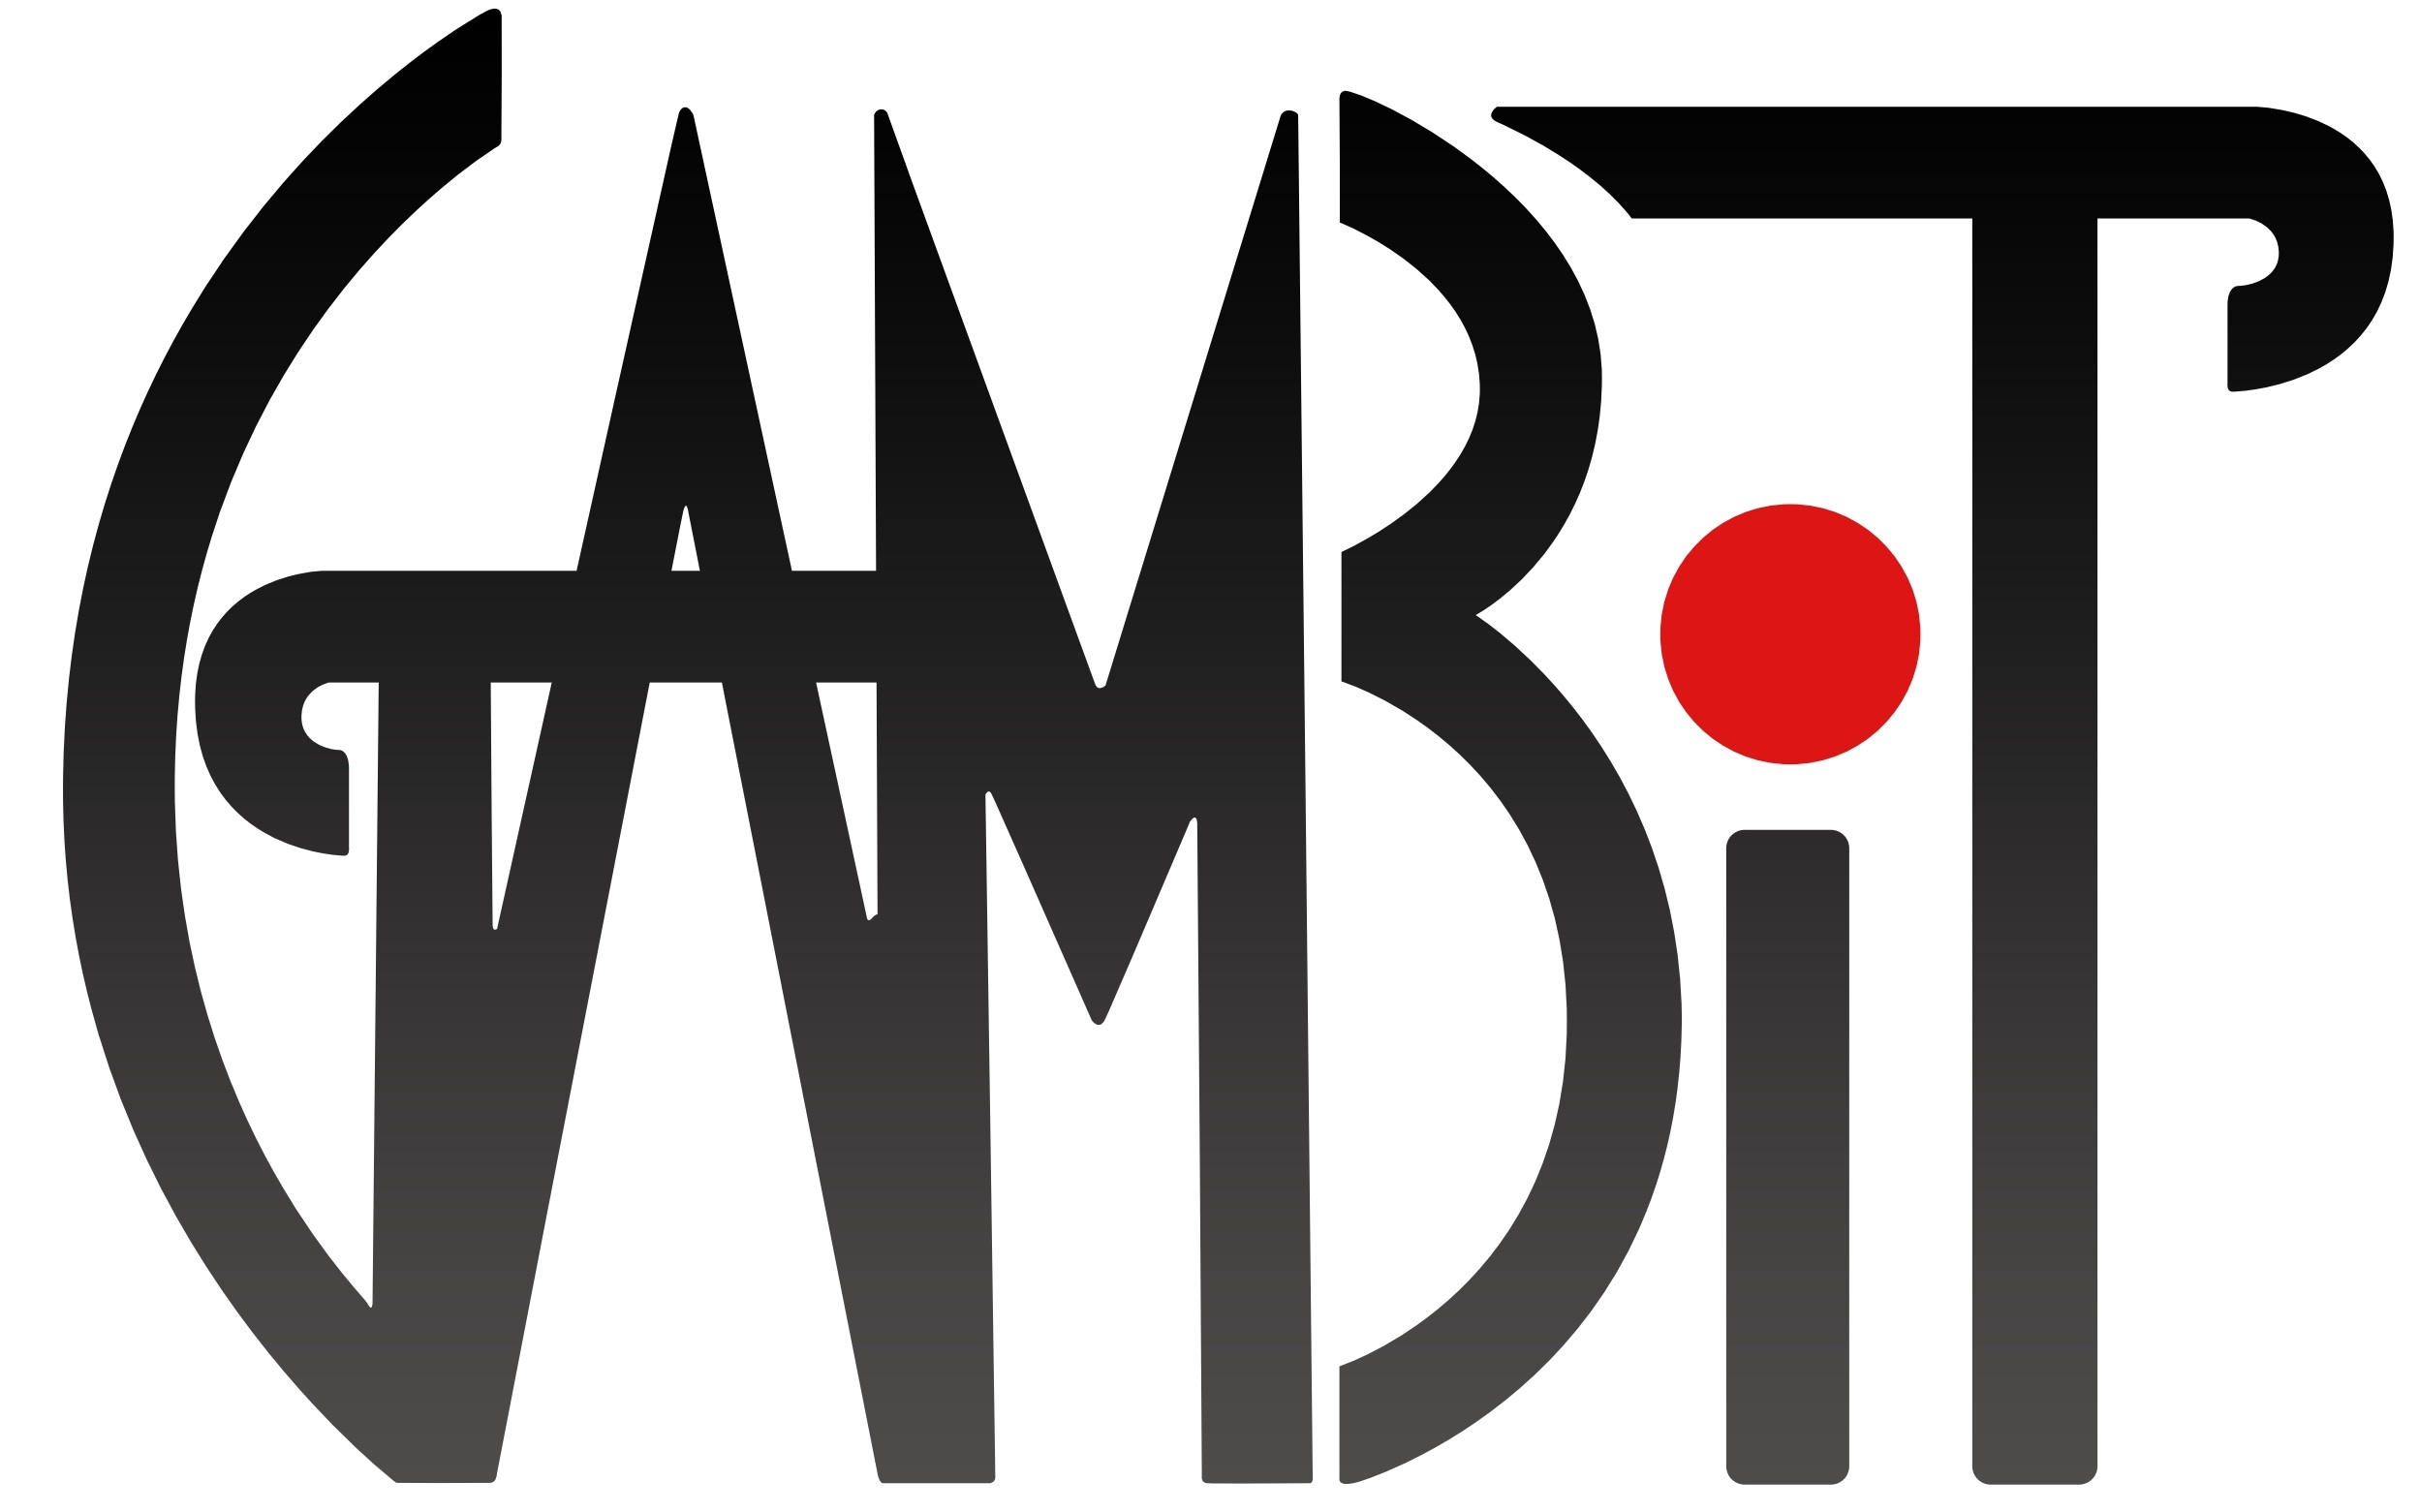 GAMBIT Logo.jpg c233491be64fe1344011213263feaaf2